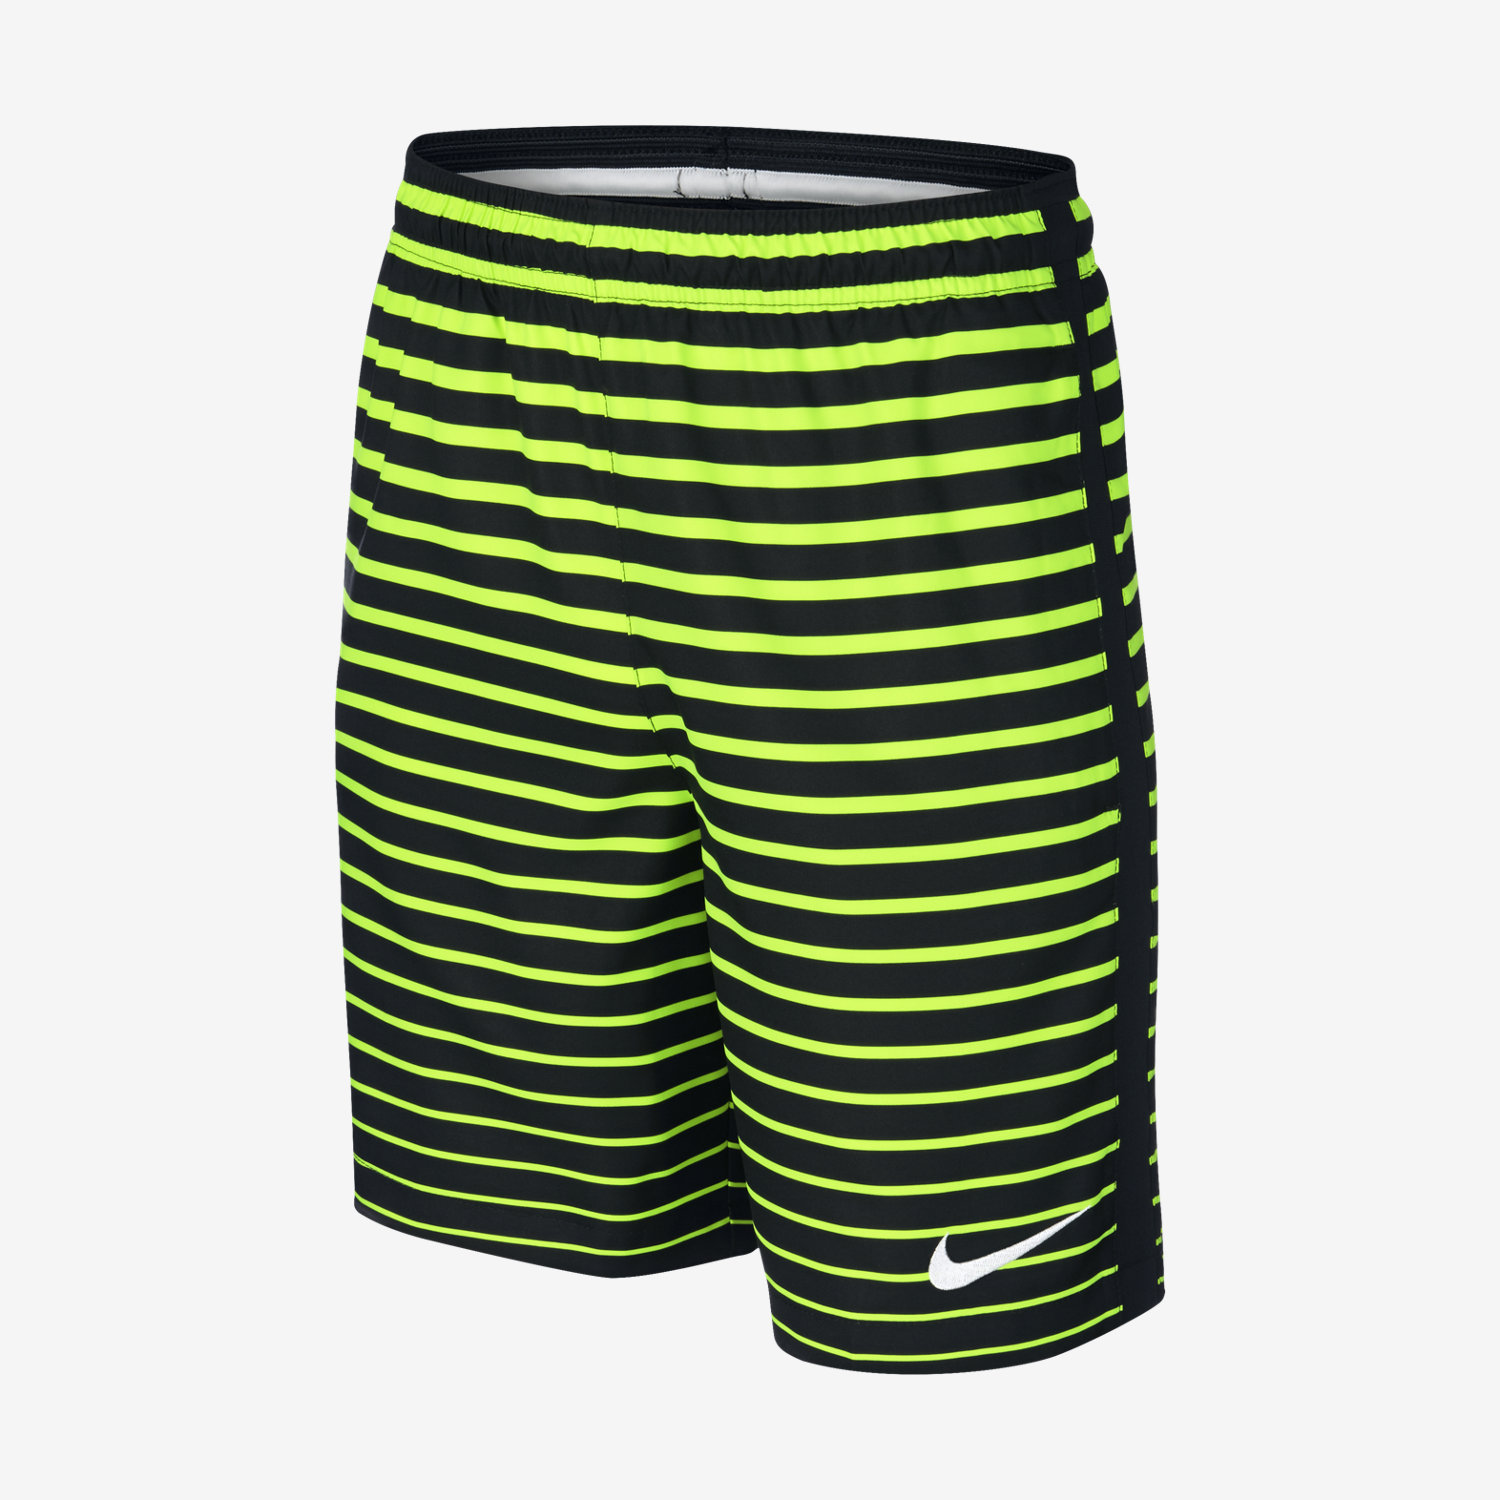 Nike Dry Squad - Older Kids' Football Shorts